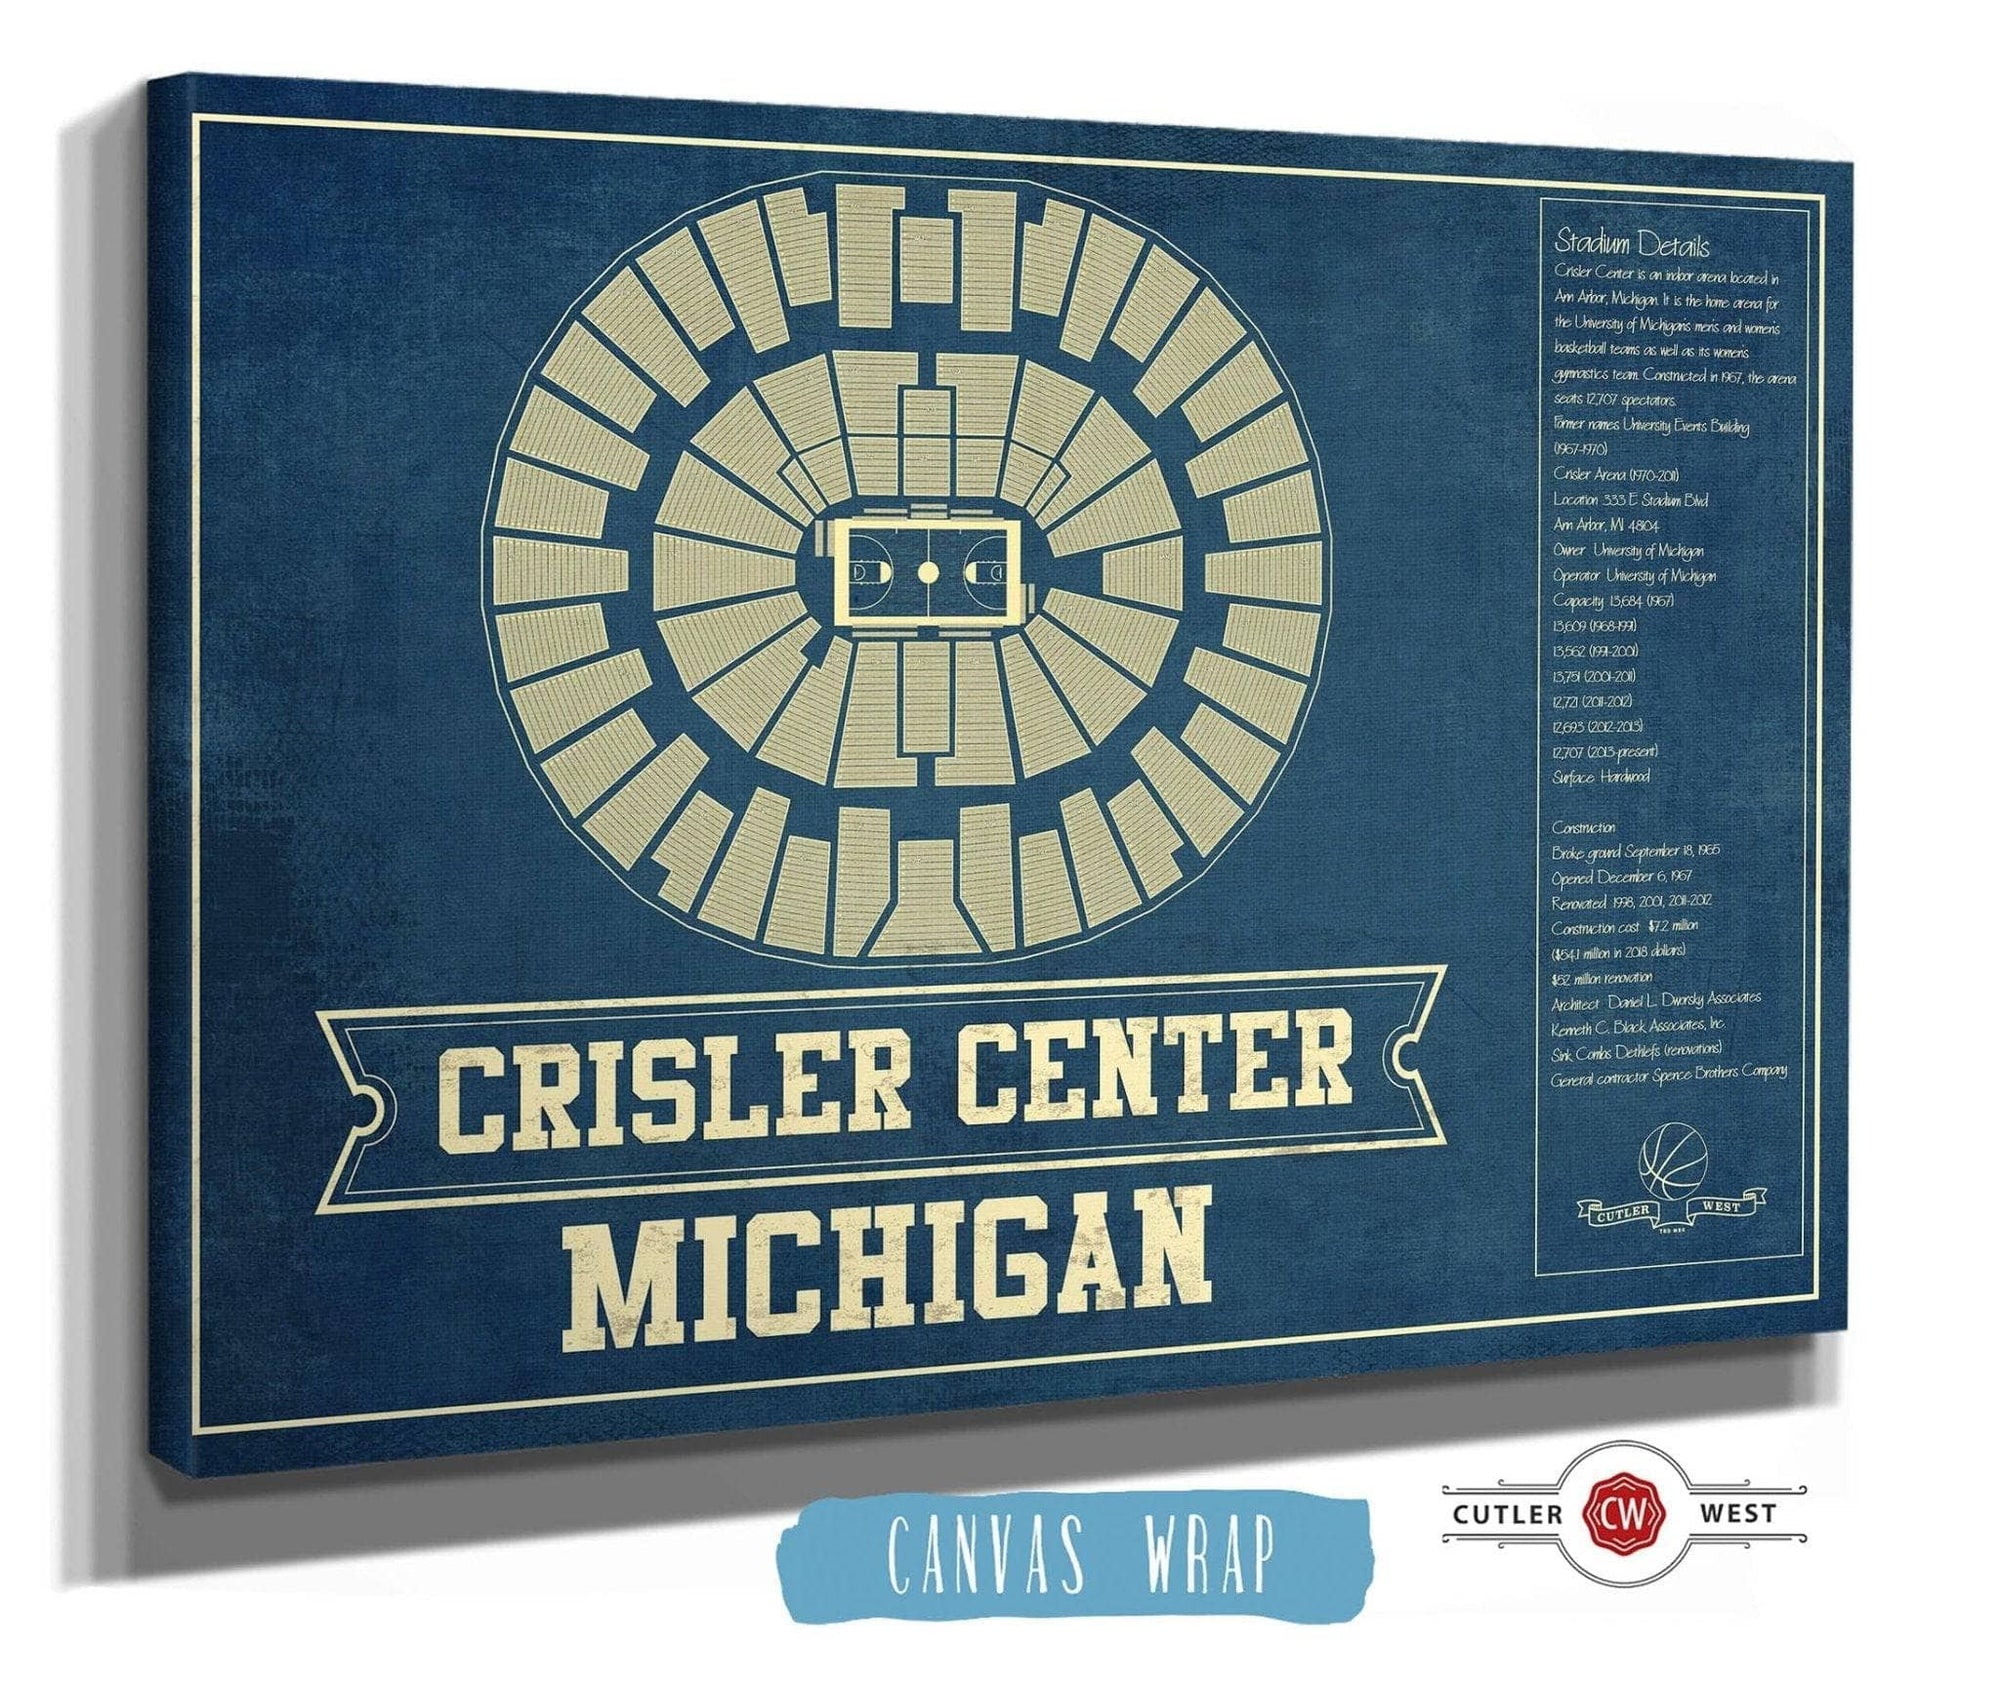 Cutler West Basketball Collection 14" x 11" / Stretched Canvas Wrap Michigan Men's Women's Basketball - Crisler Center NCAA Vintage Print 93335023684091